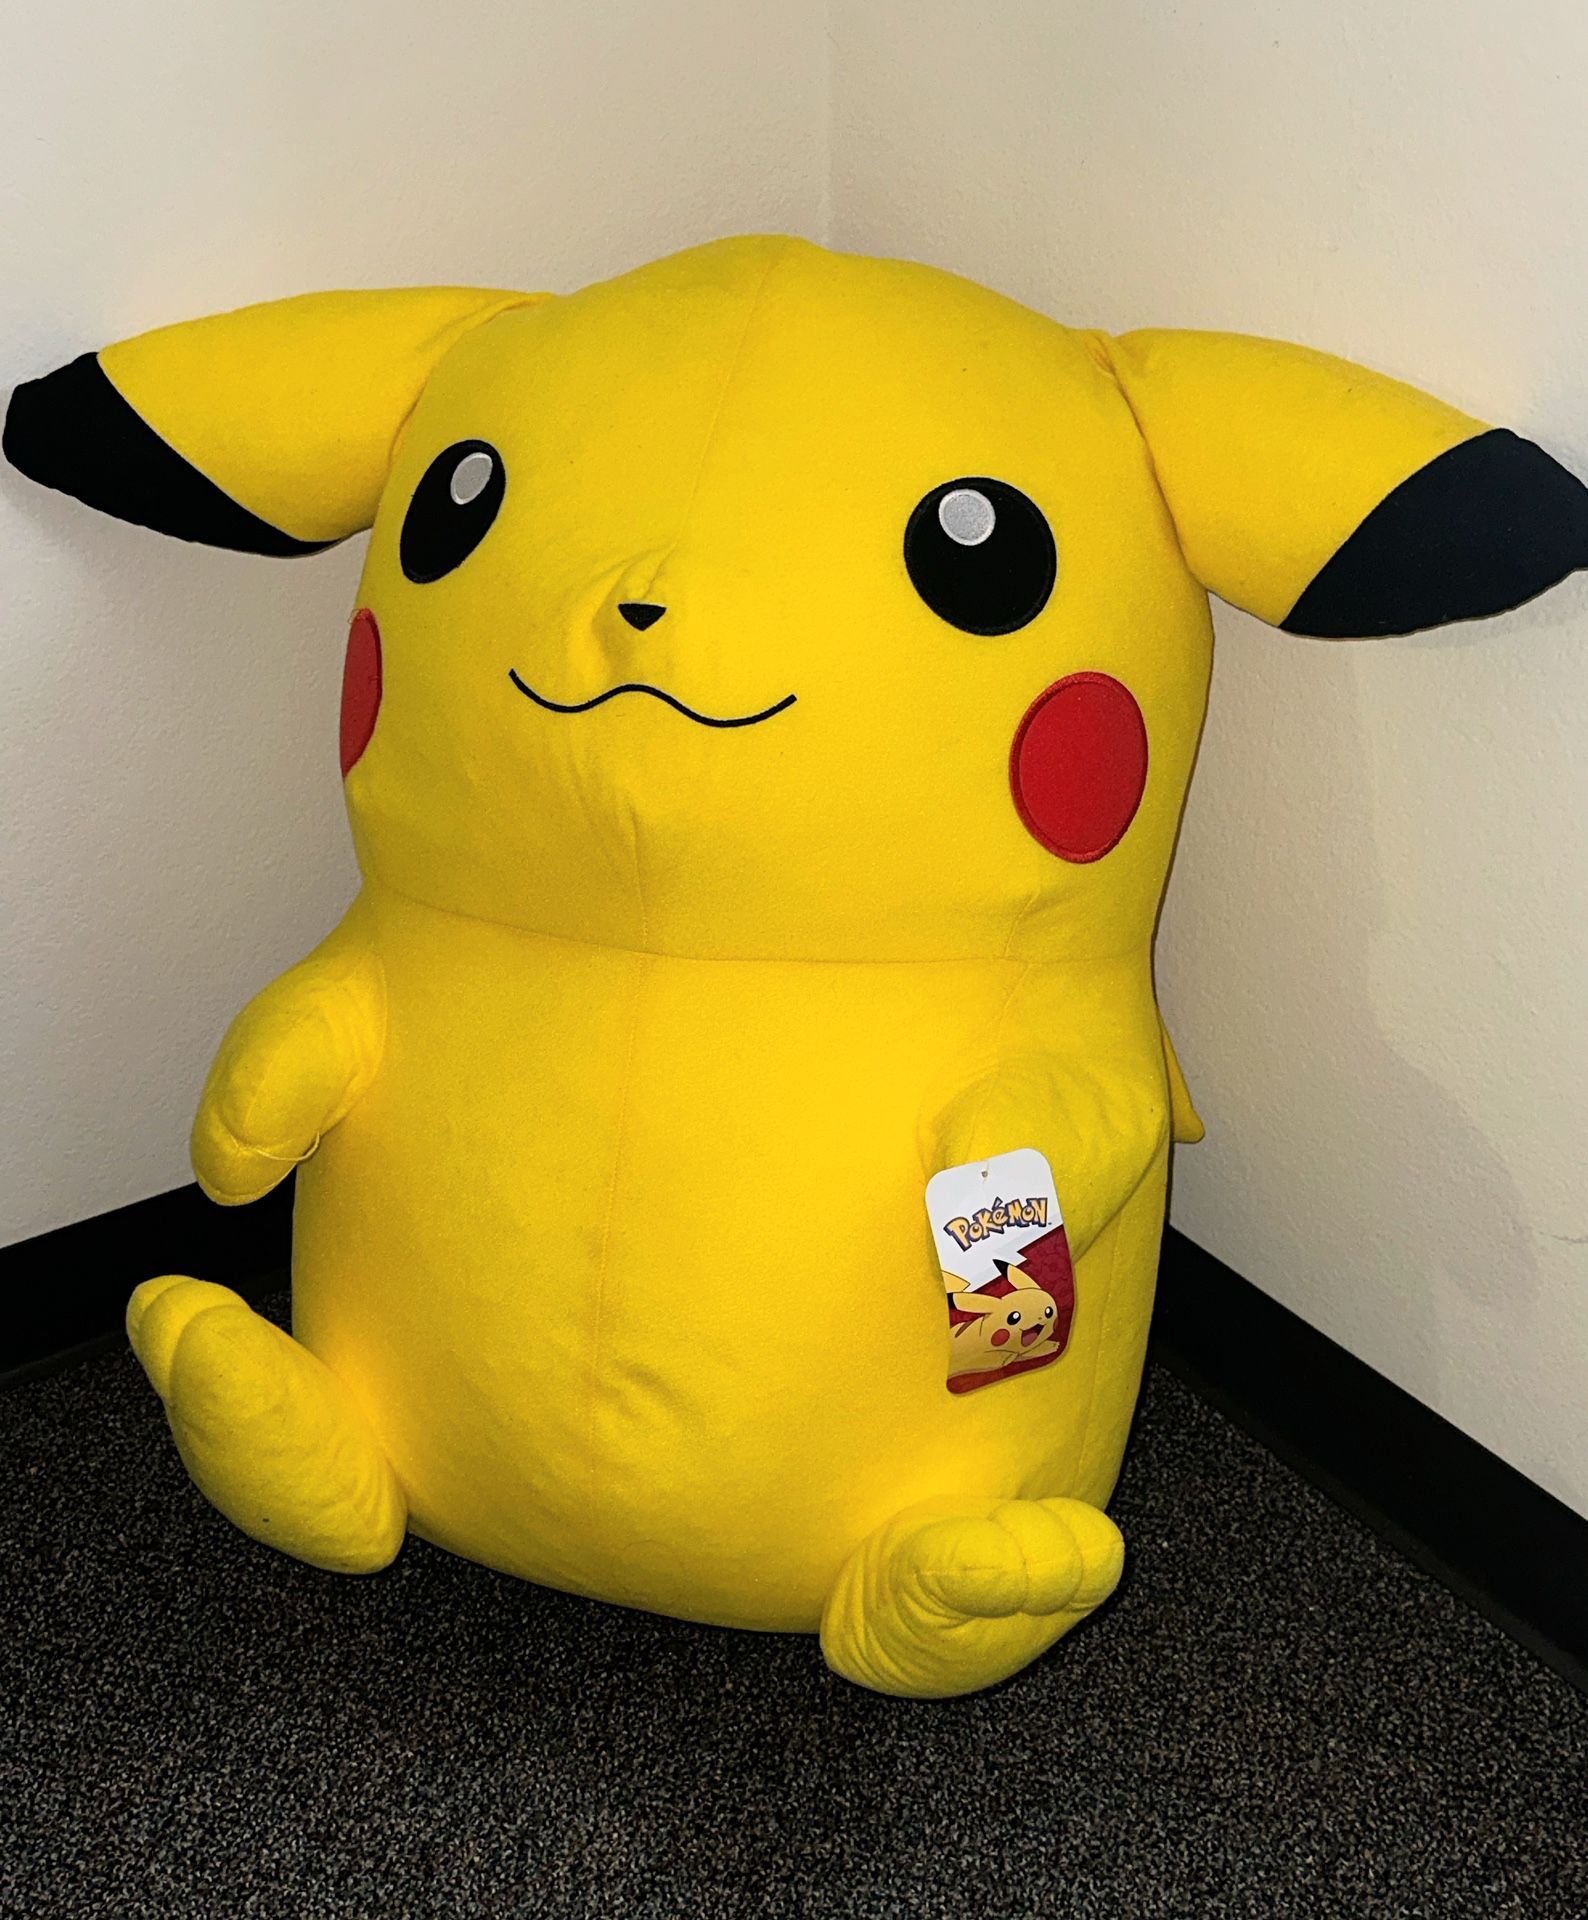 Pokémon: Giant 32” Pikachu Plush Toy 